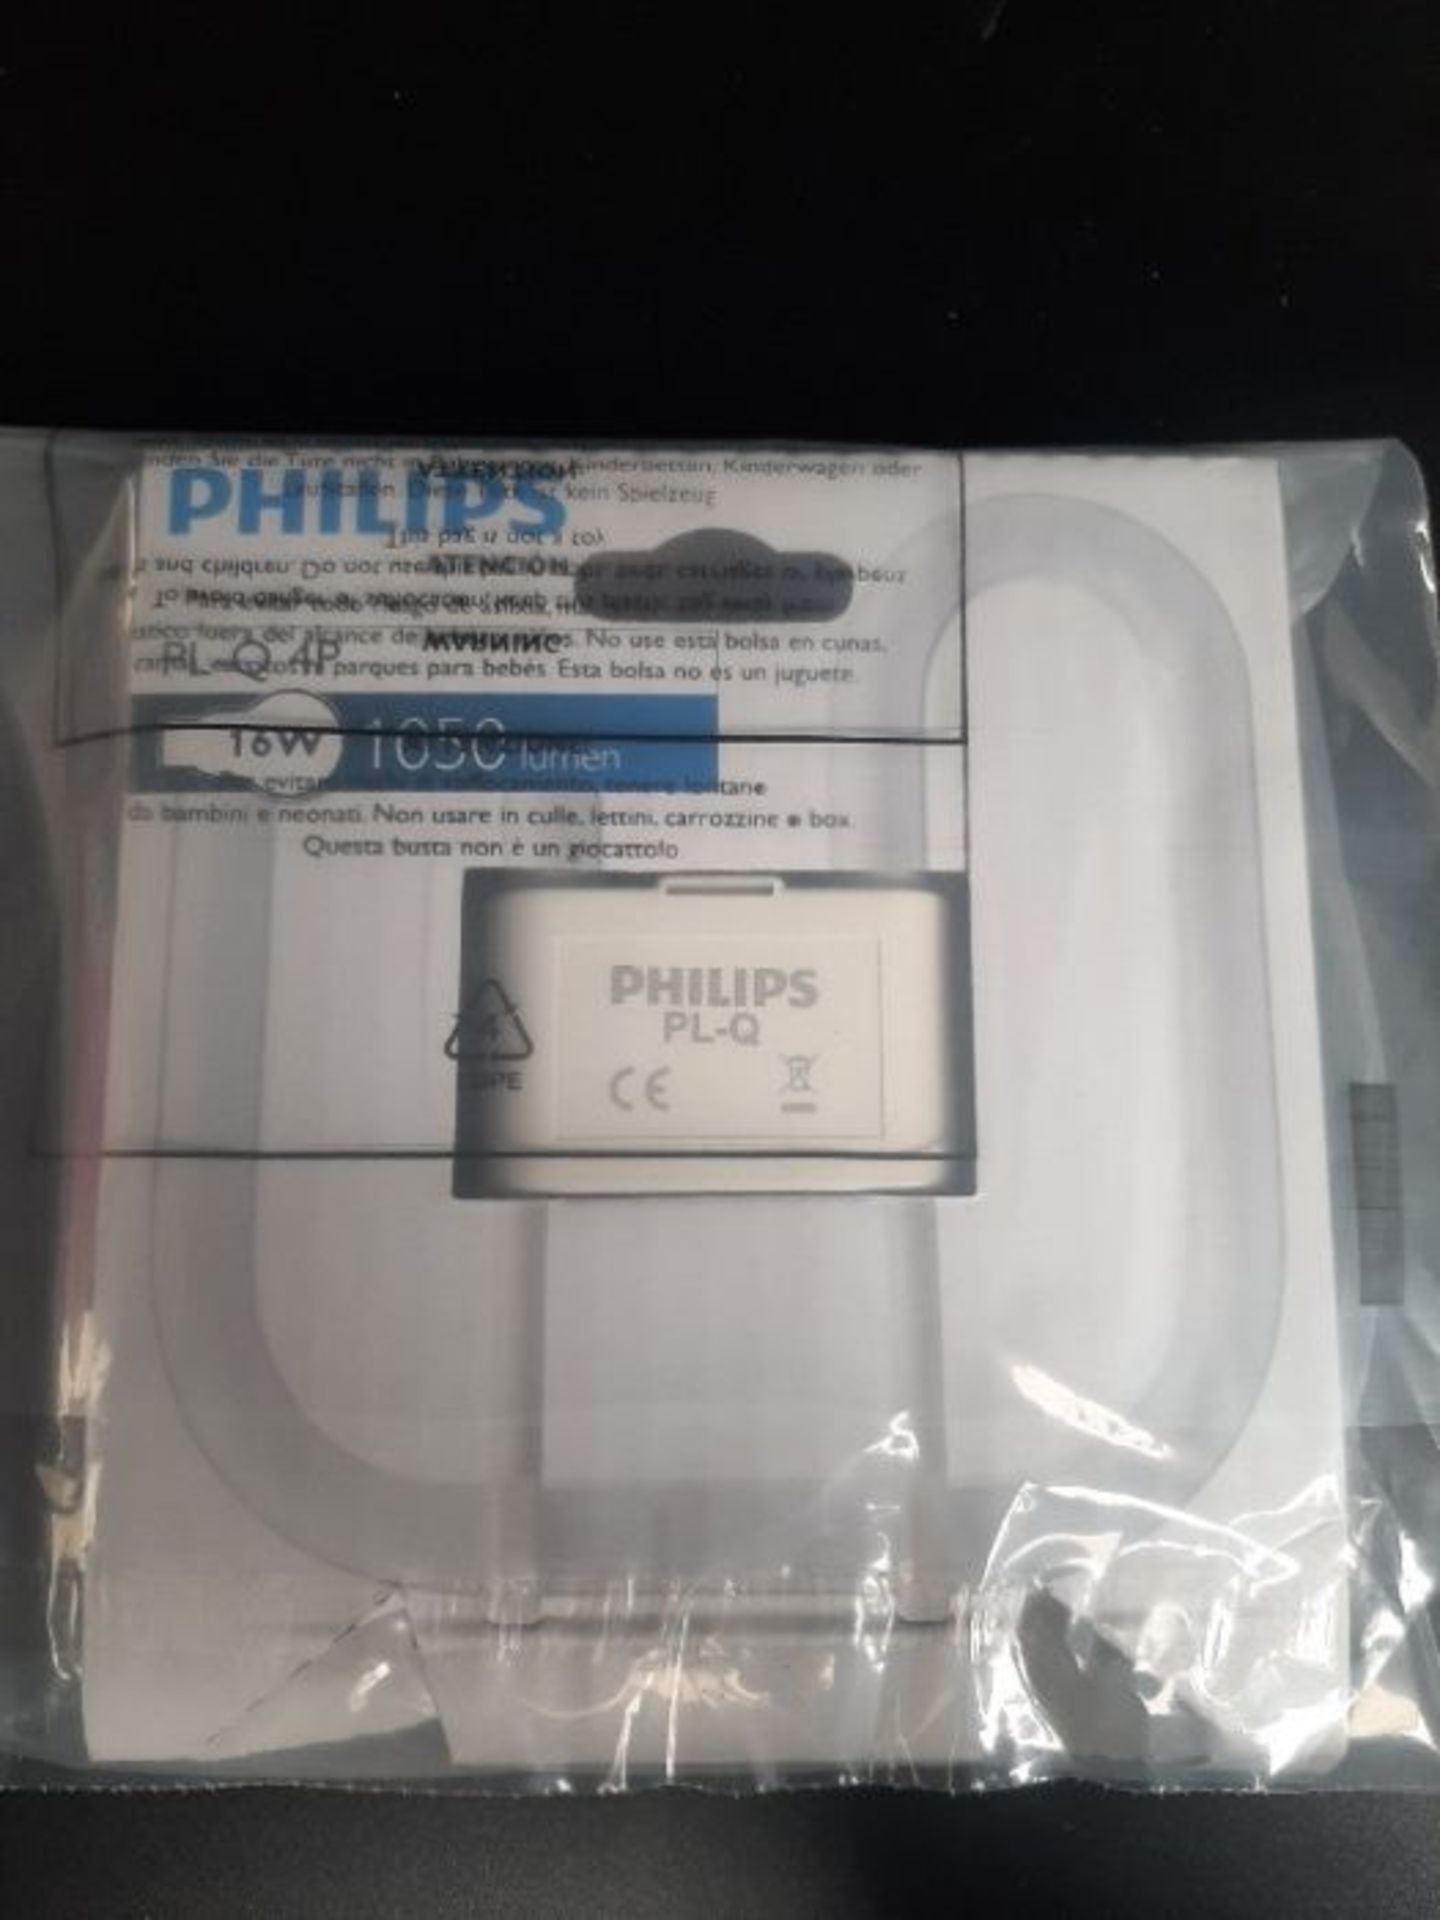 Philips PL-Q 16W GR10Q 4 Pin Compact Fluorescent Light Bulb - 16W/830/4P Warm White Li - Image 2 of 2